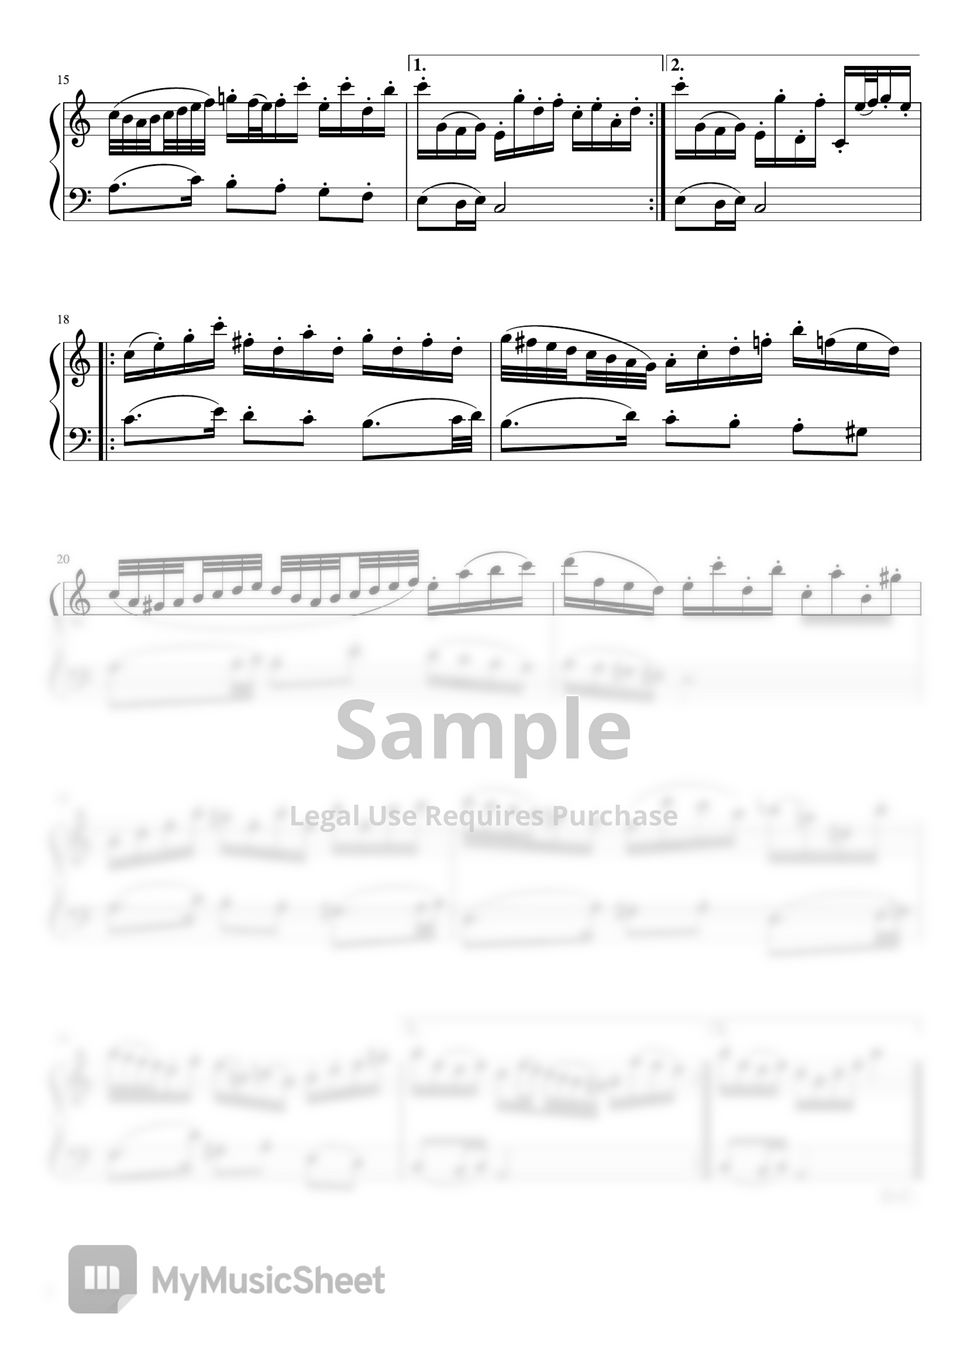 J.S.Bach - Polonaise Orchestra No.2 (Am) BWV1067 (pianosolo/beginner) by pfkaori